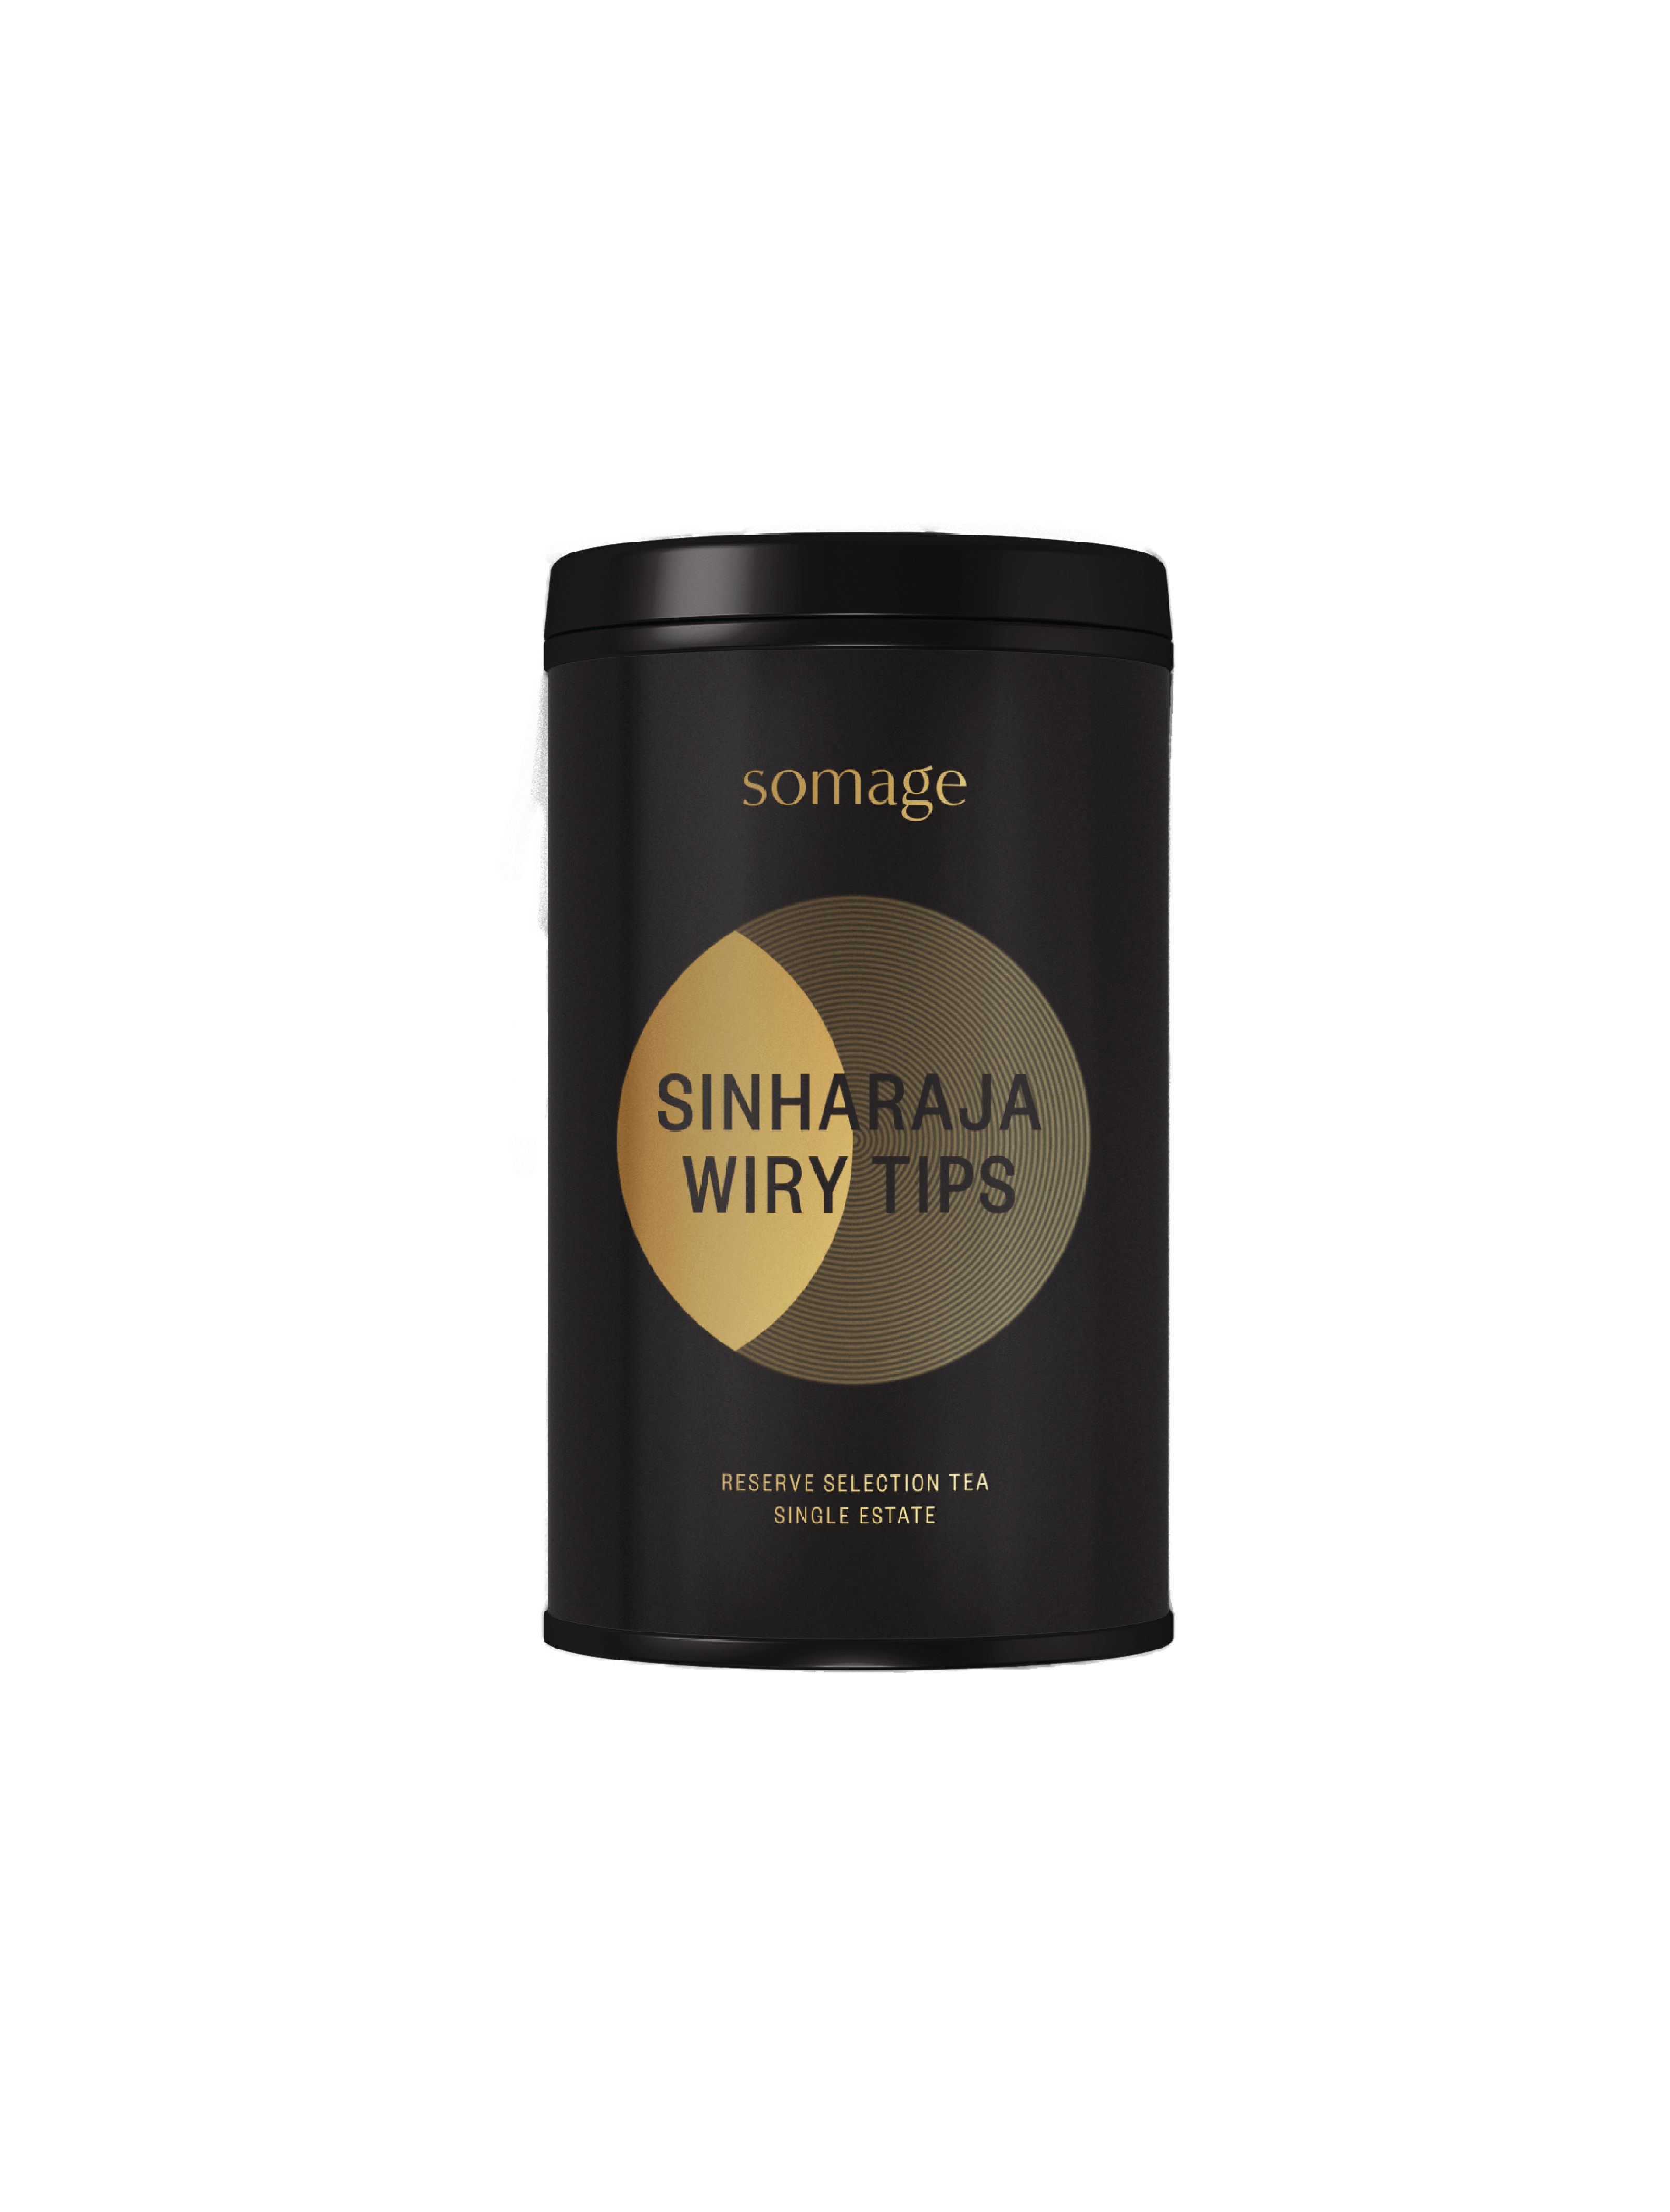 Sinharaja Wiry Tips Tea Tin